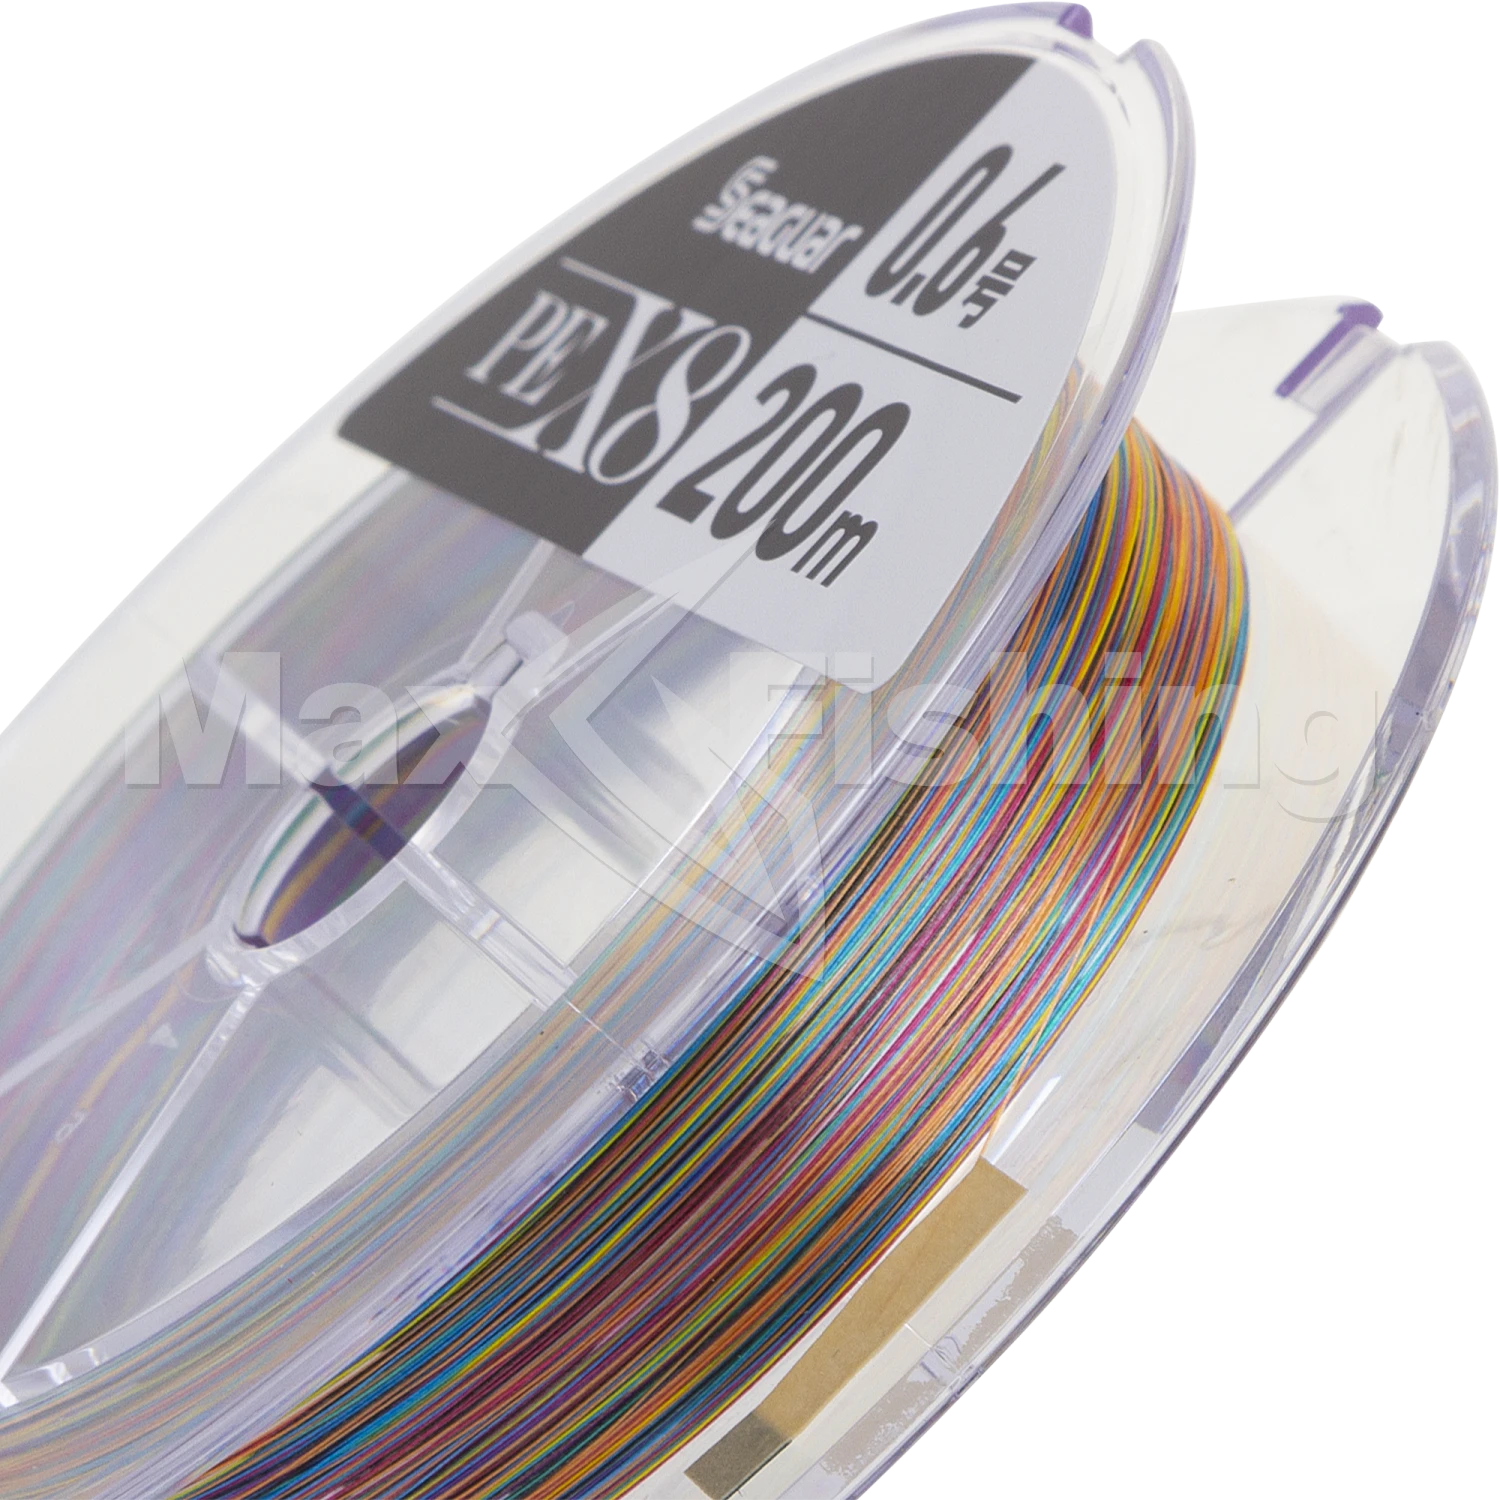 Шнур плетеный Seaguar PE X8 #0,6 0,128мм 200м (multicolor)